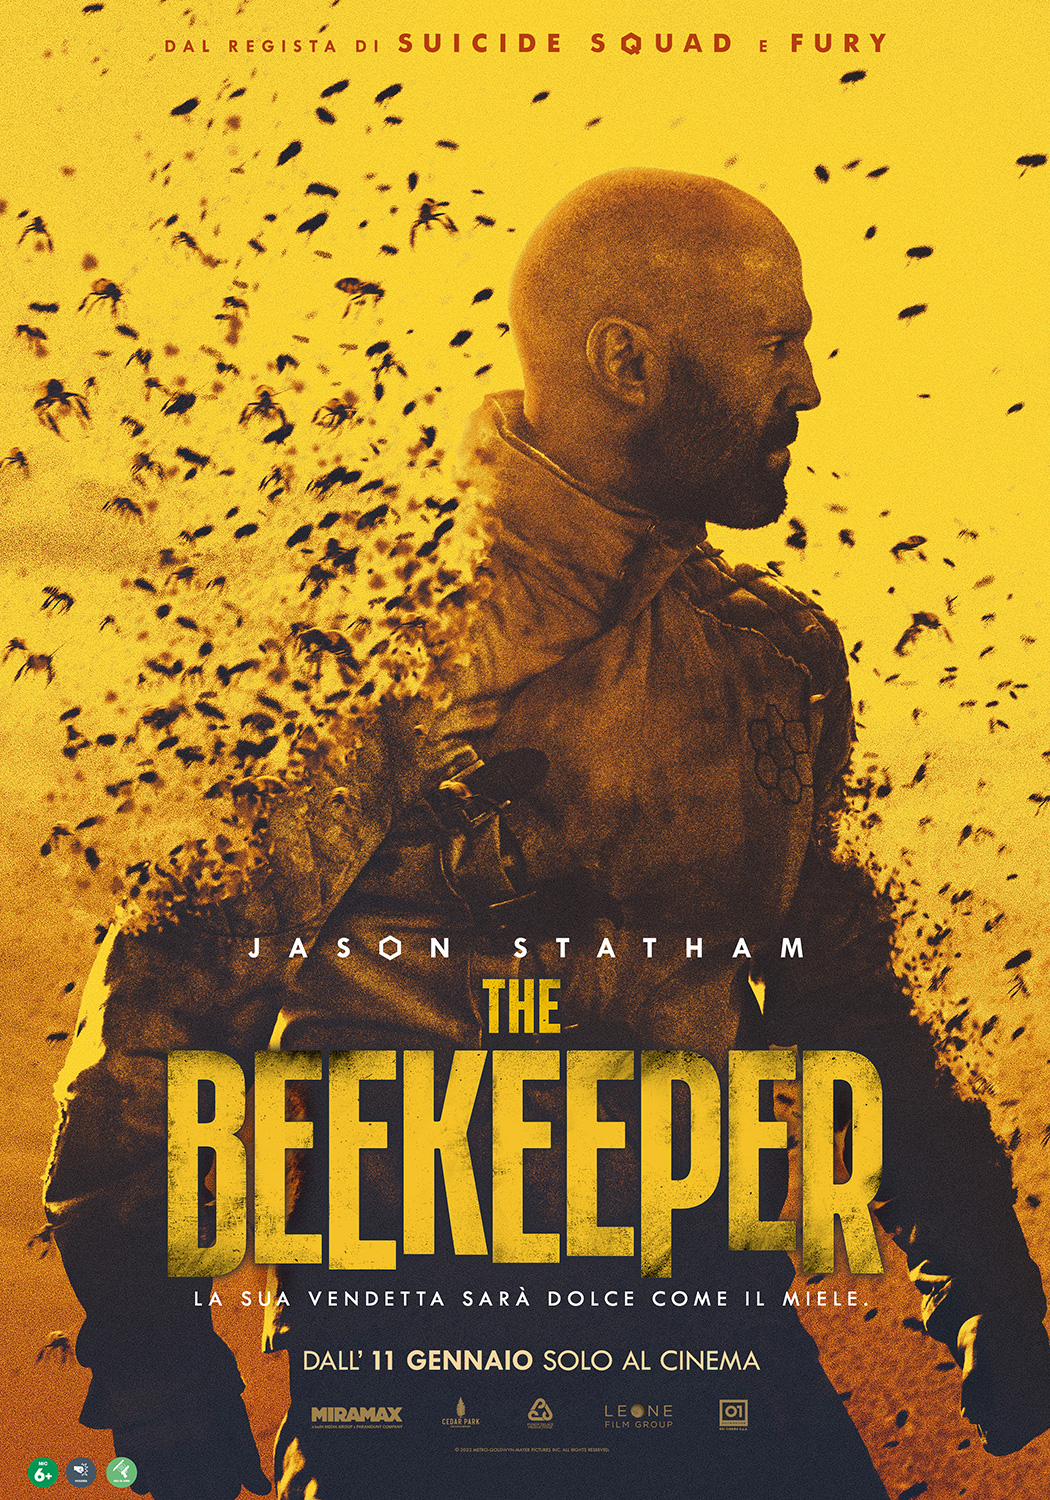 The Beekeeper, un action movie divertente e adrenalinico